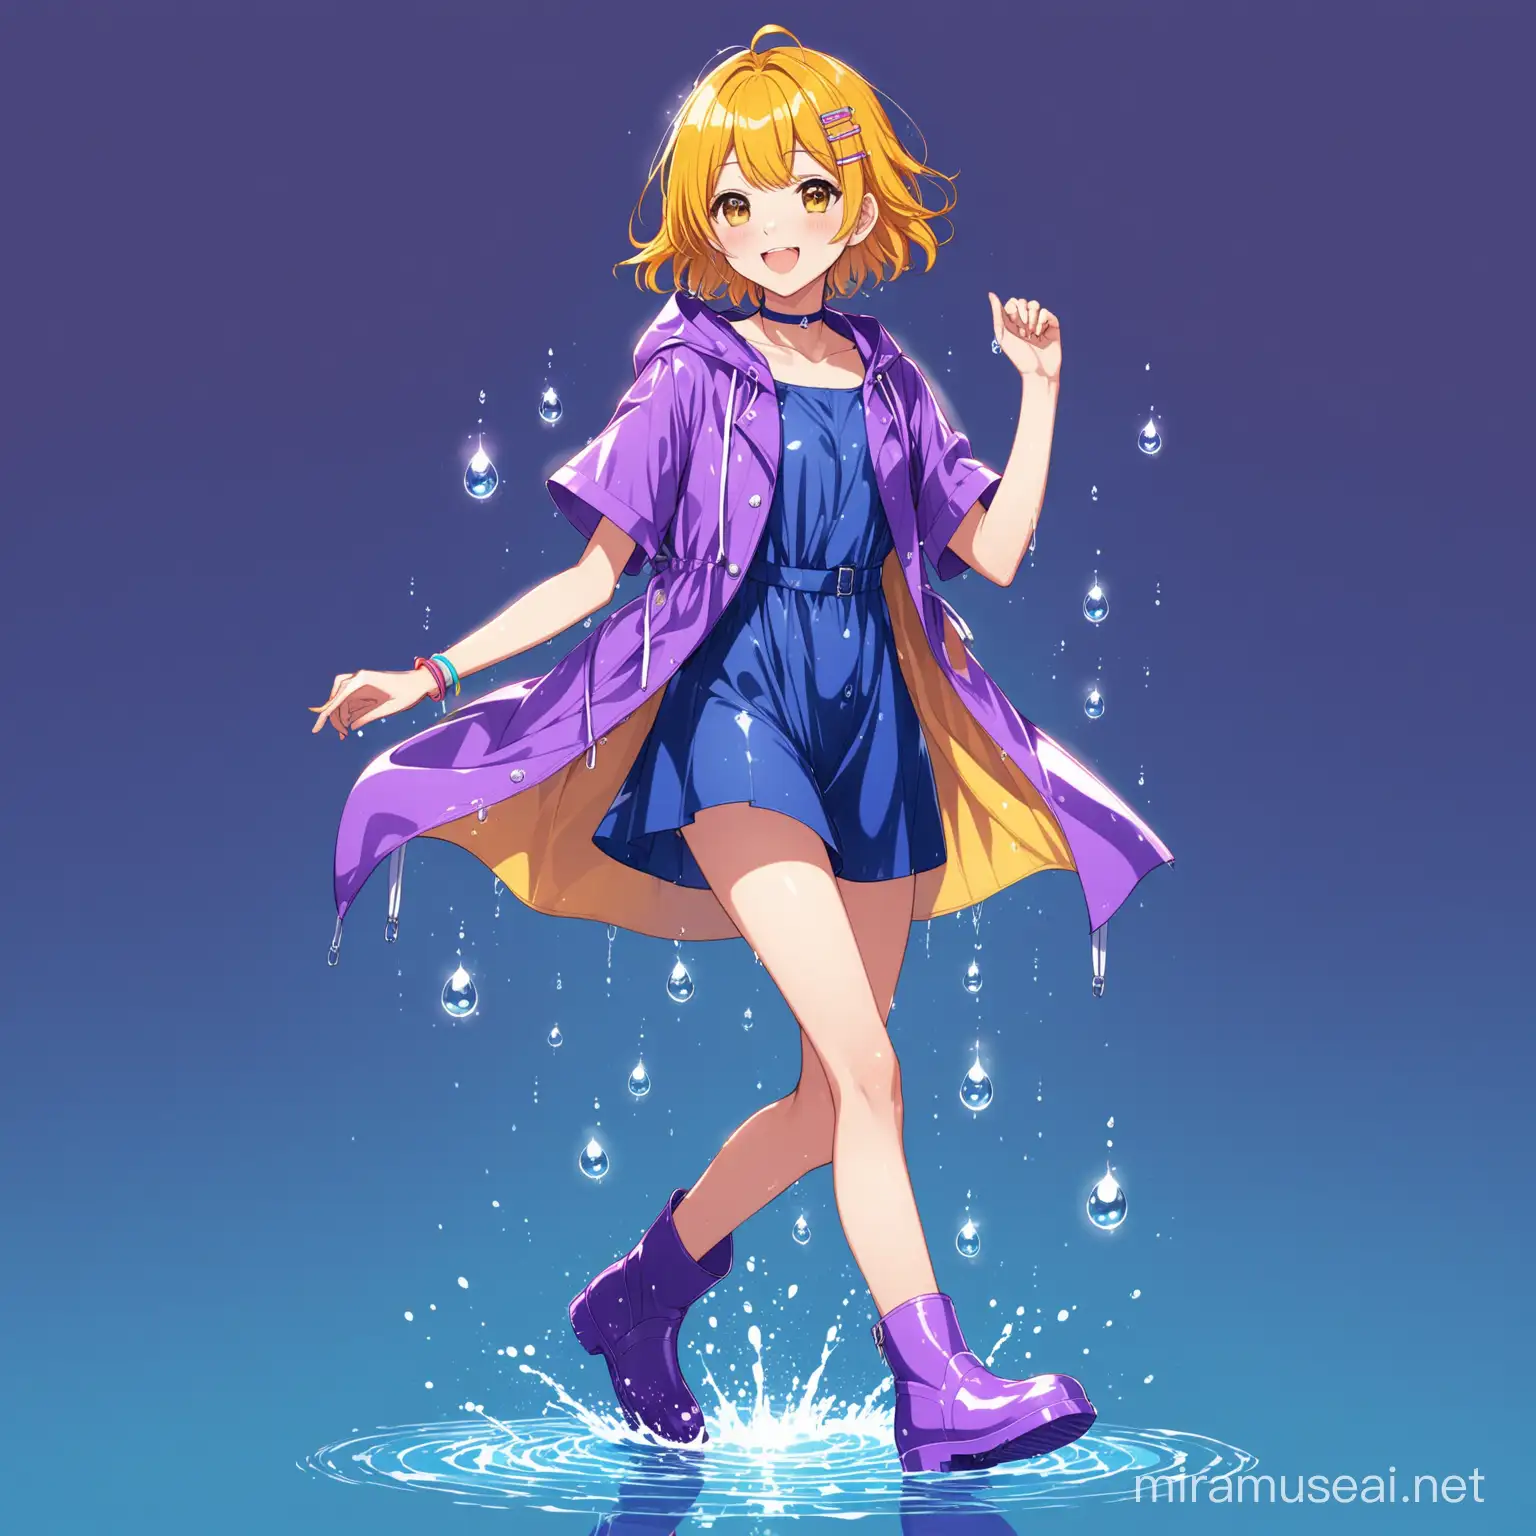 Cheerful Anime Trap Idol in Marigold Hair and Purple Raincoat